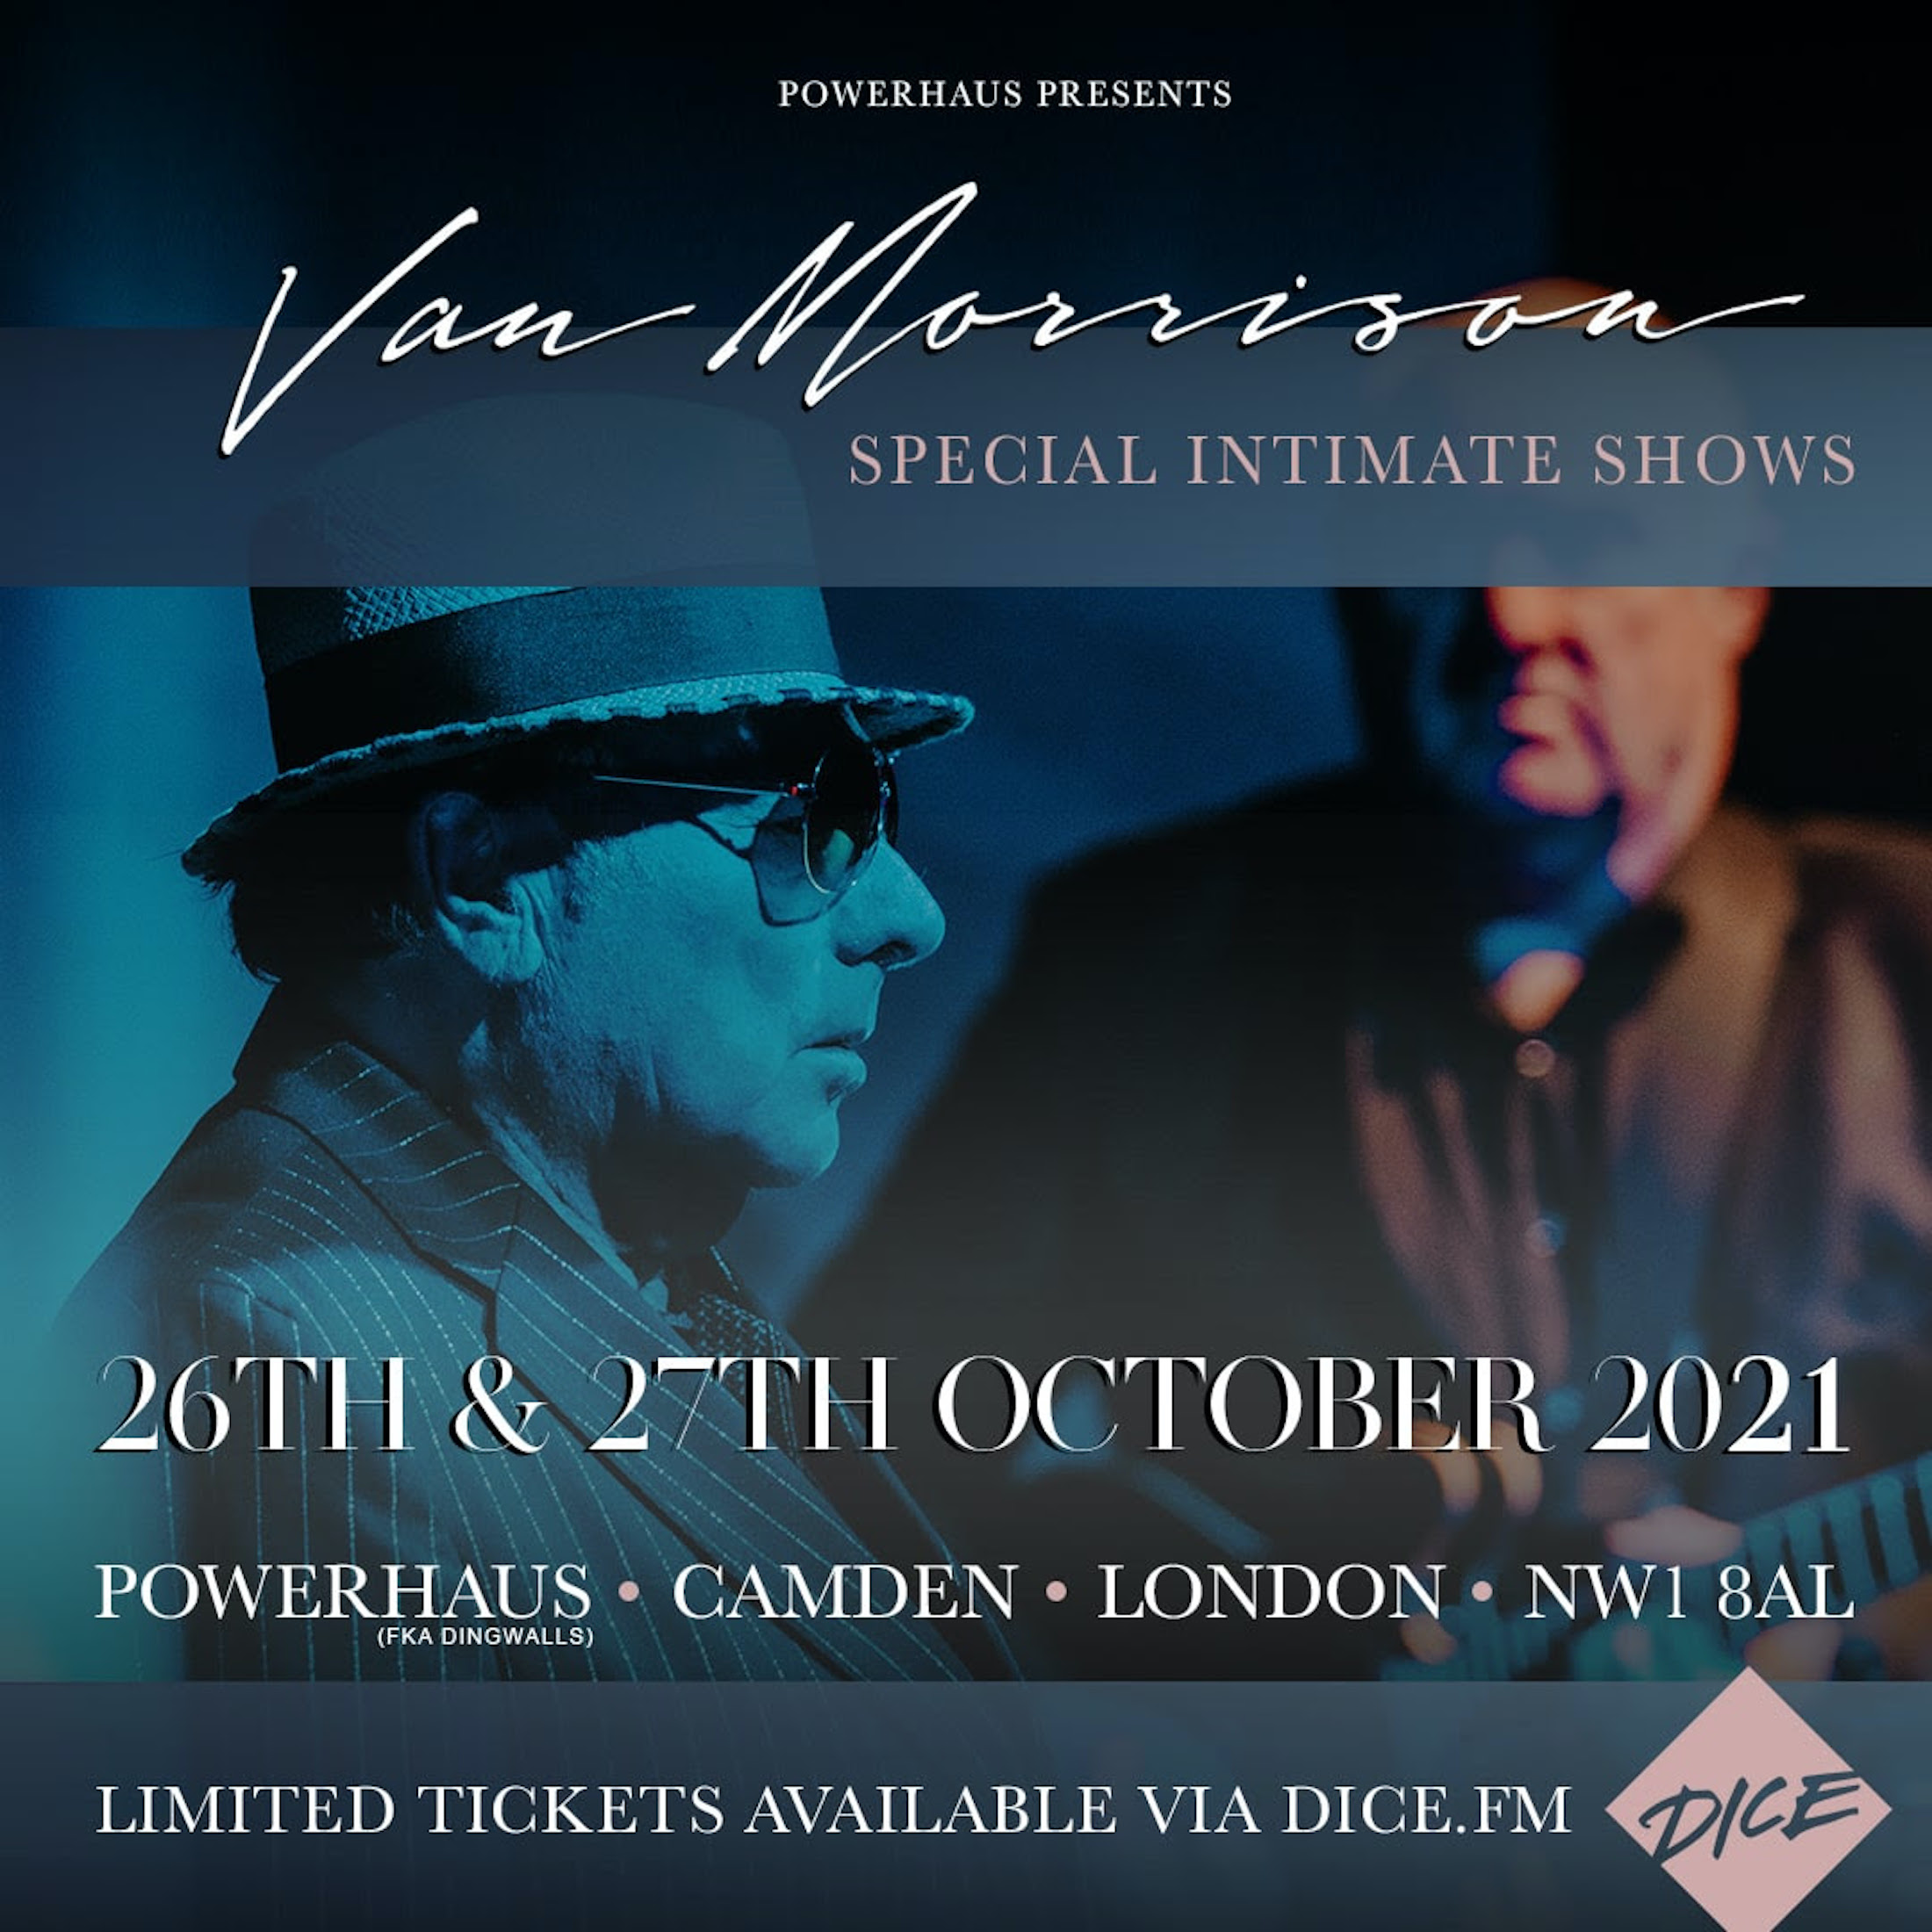 Powerhaus Presents Van Morrison Live in London